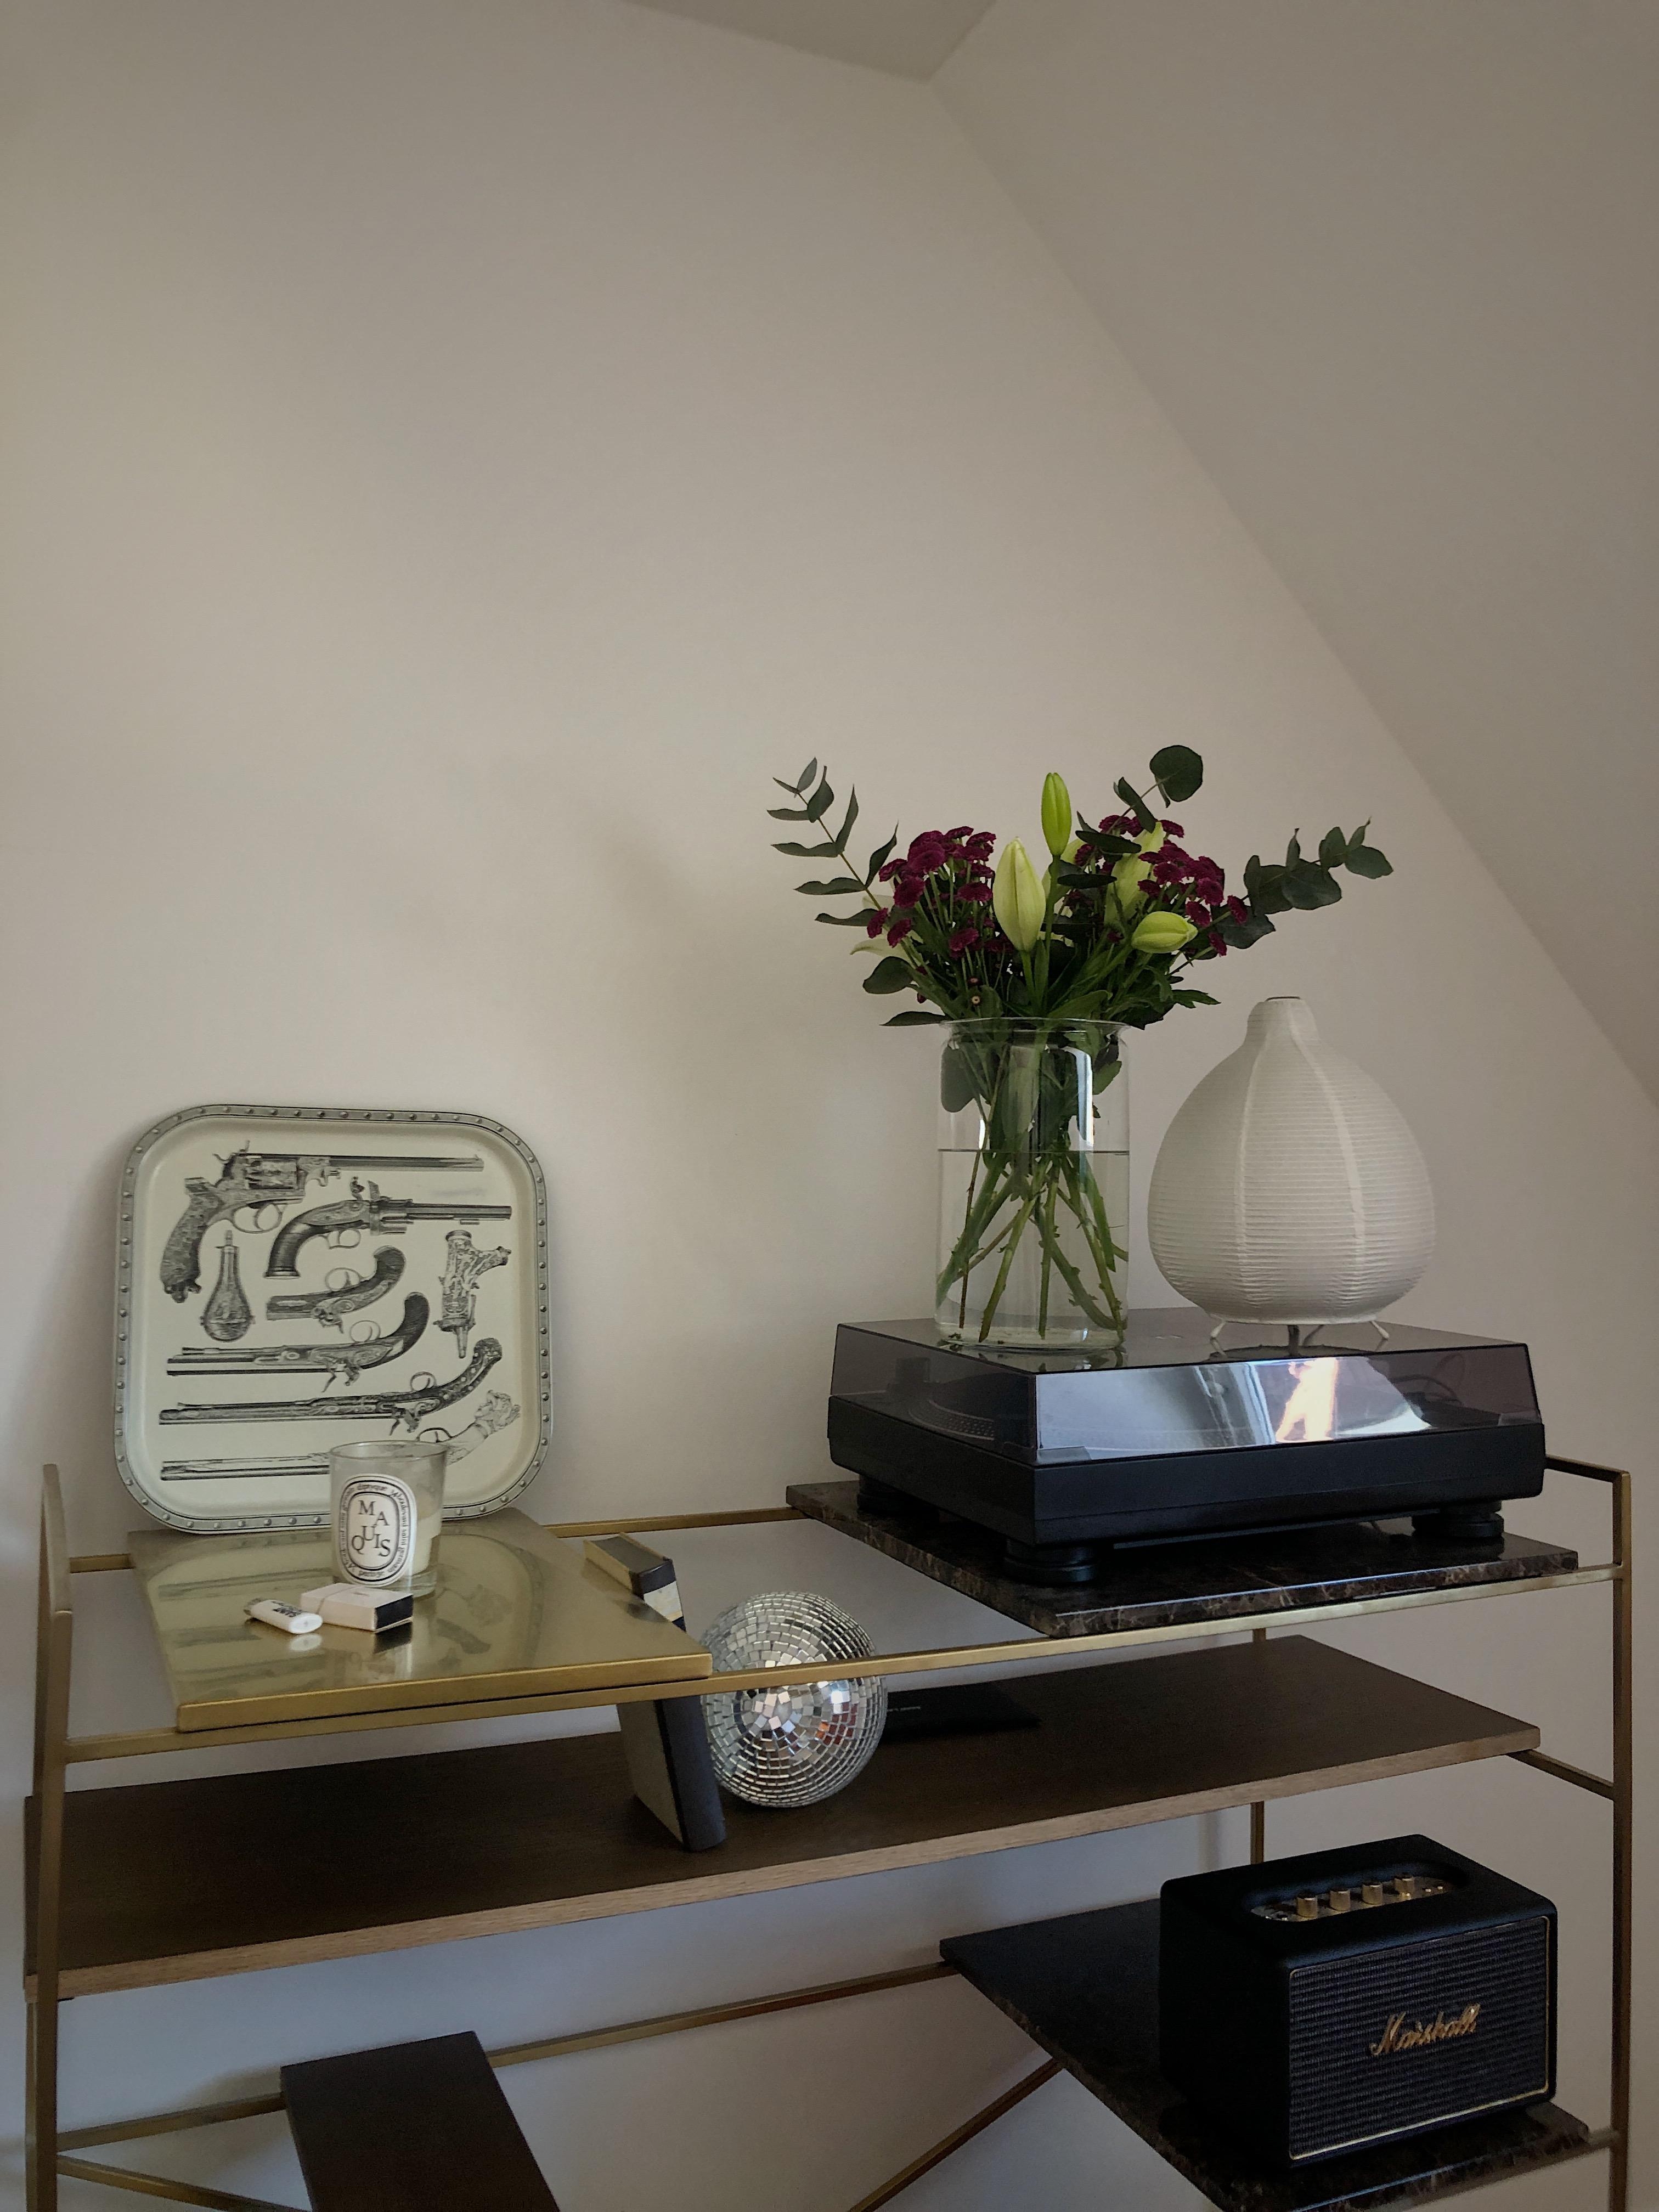 Favorite corner currently with favourite lamp 🍜
#cozy #home #interior #shelfie #regaldetails #regalstyling #marmorregal